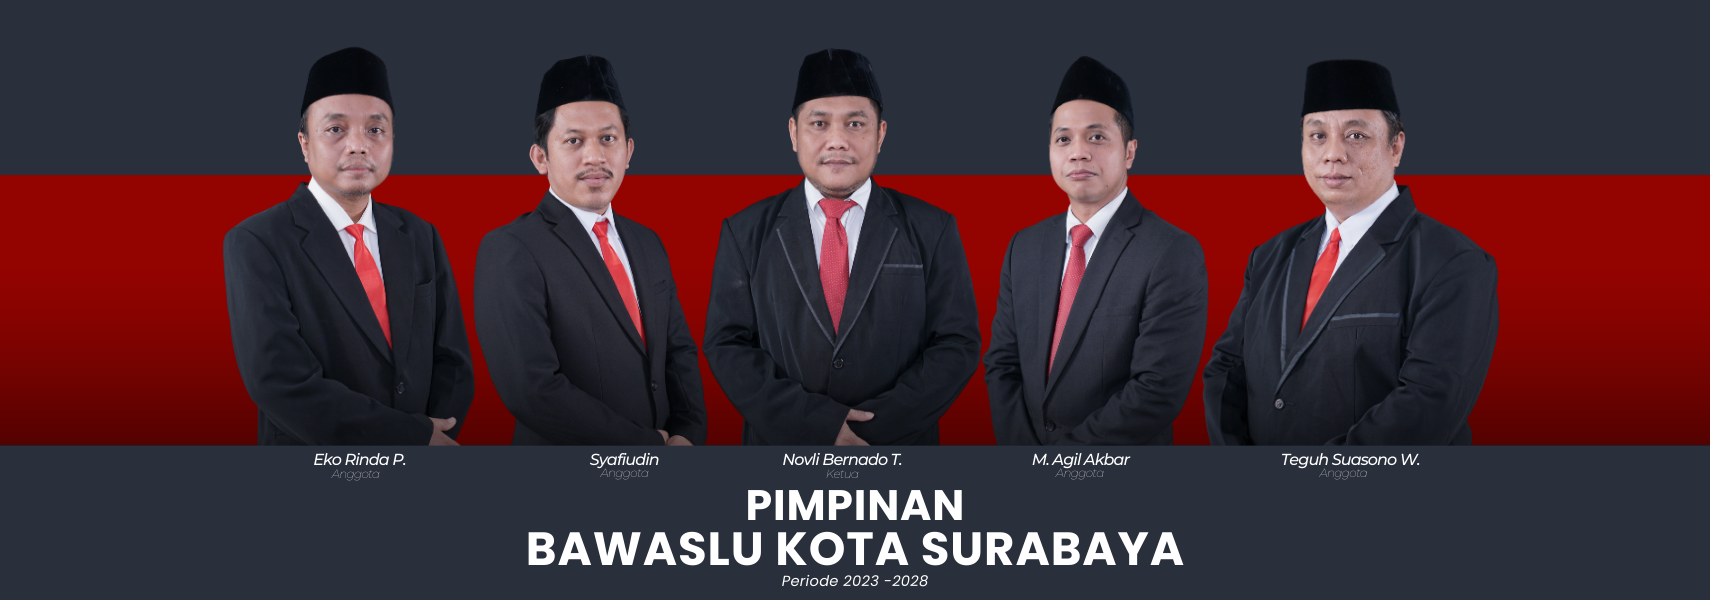 Profil Pimpinan Bawaslu Kota Surabaya